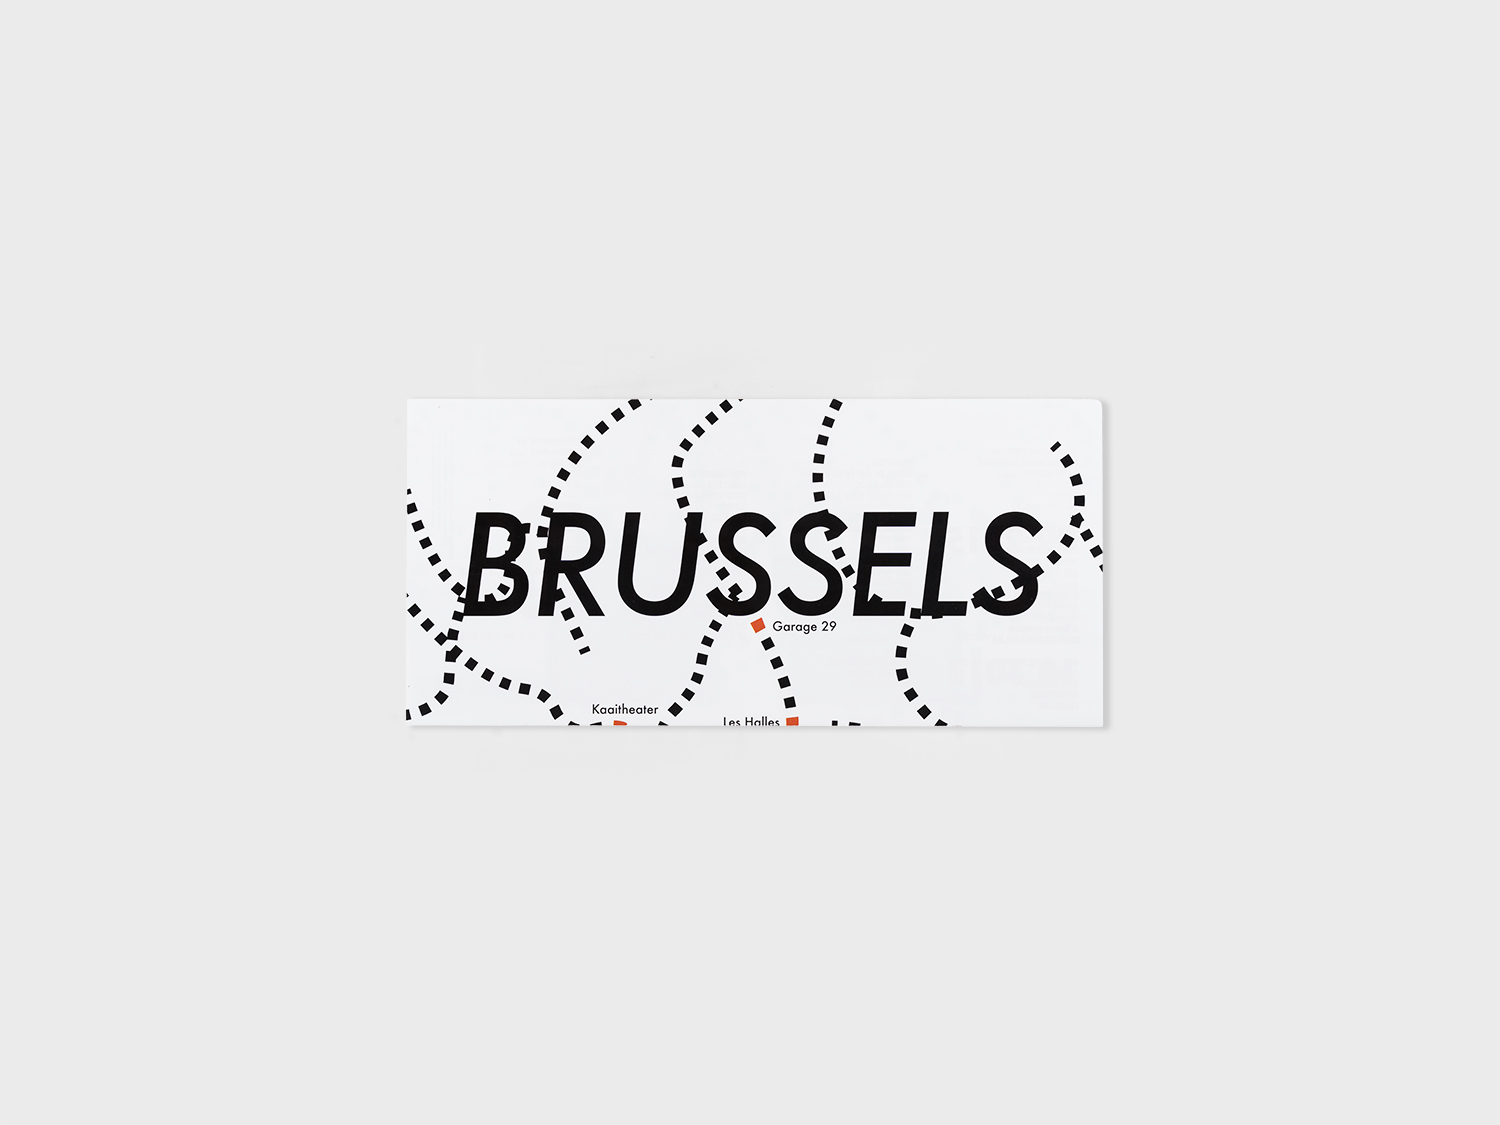 Brussels Dance!/19